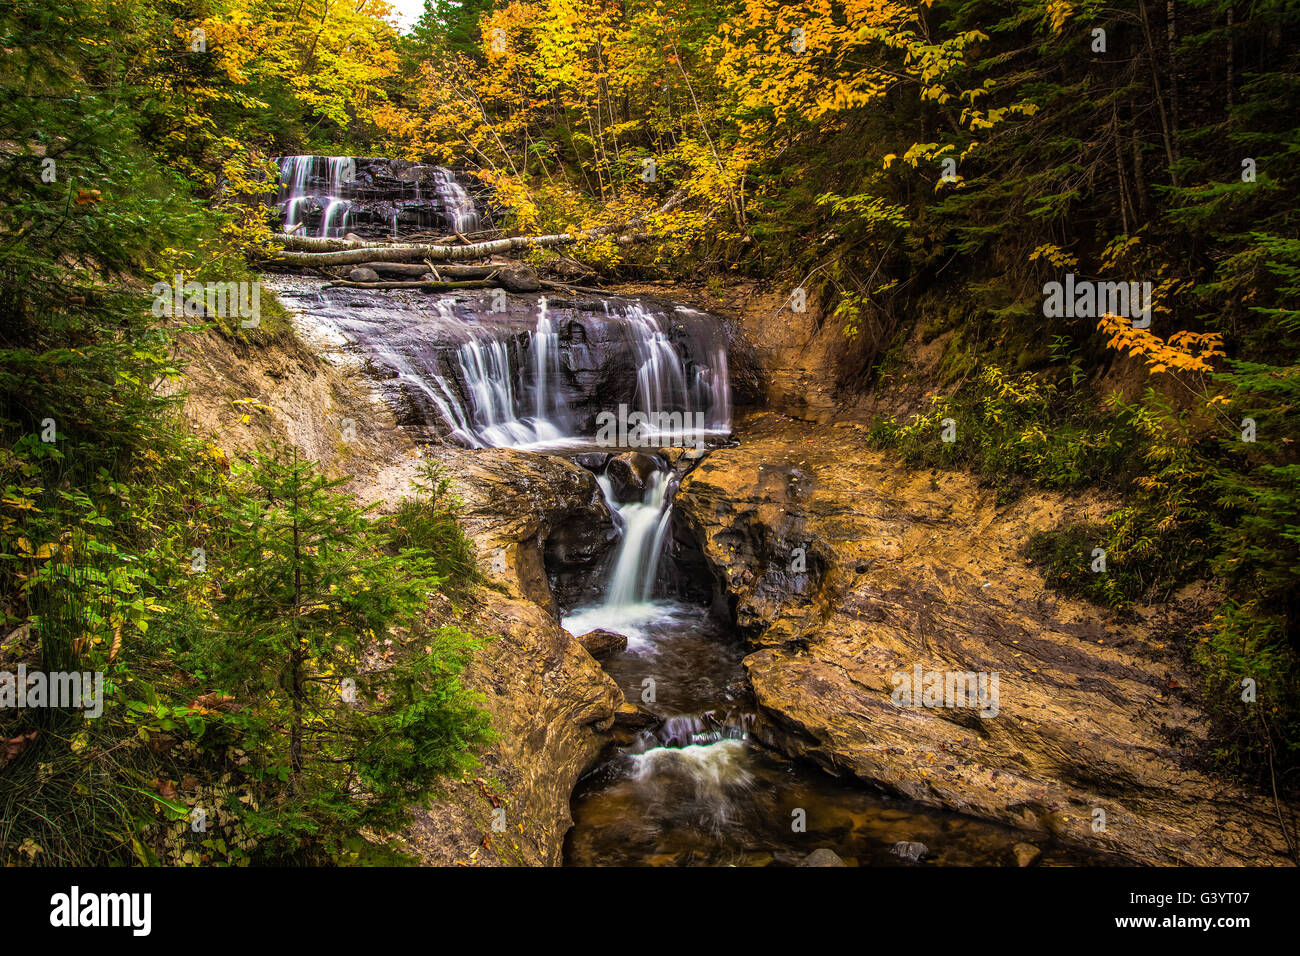 Herbst Wasserfall. Zobel fällt im Herbst Laub in die abgebildete Rocks National Lake Shore in Michigan umgeben. Stockfoto